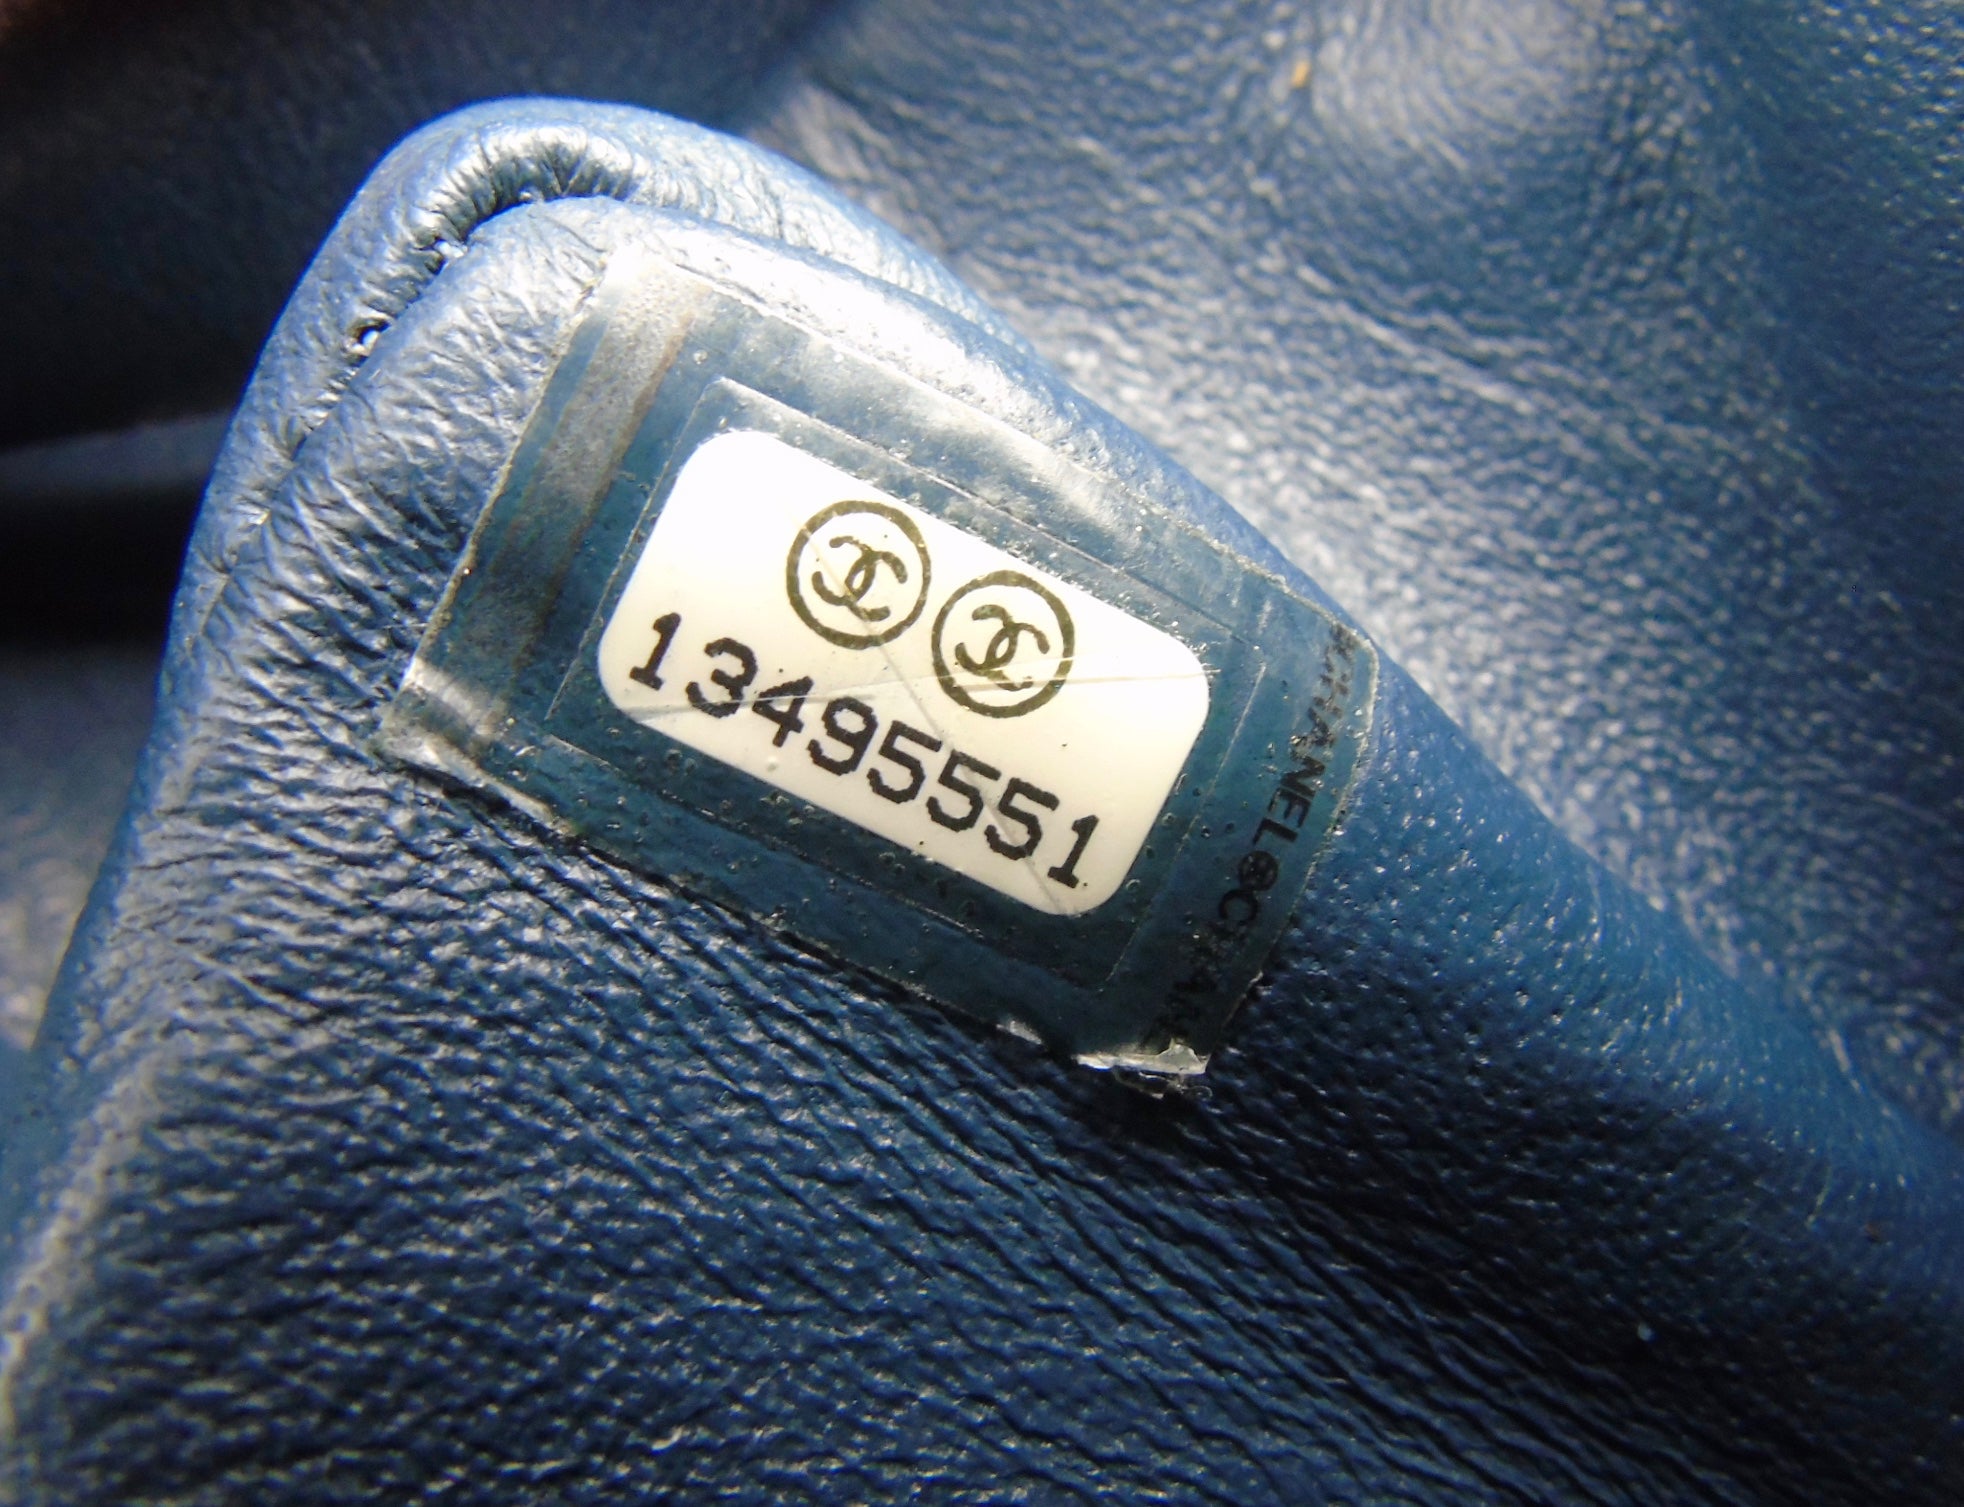 CHANEL slate blue lambskin classic mini square flap bag ghw